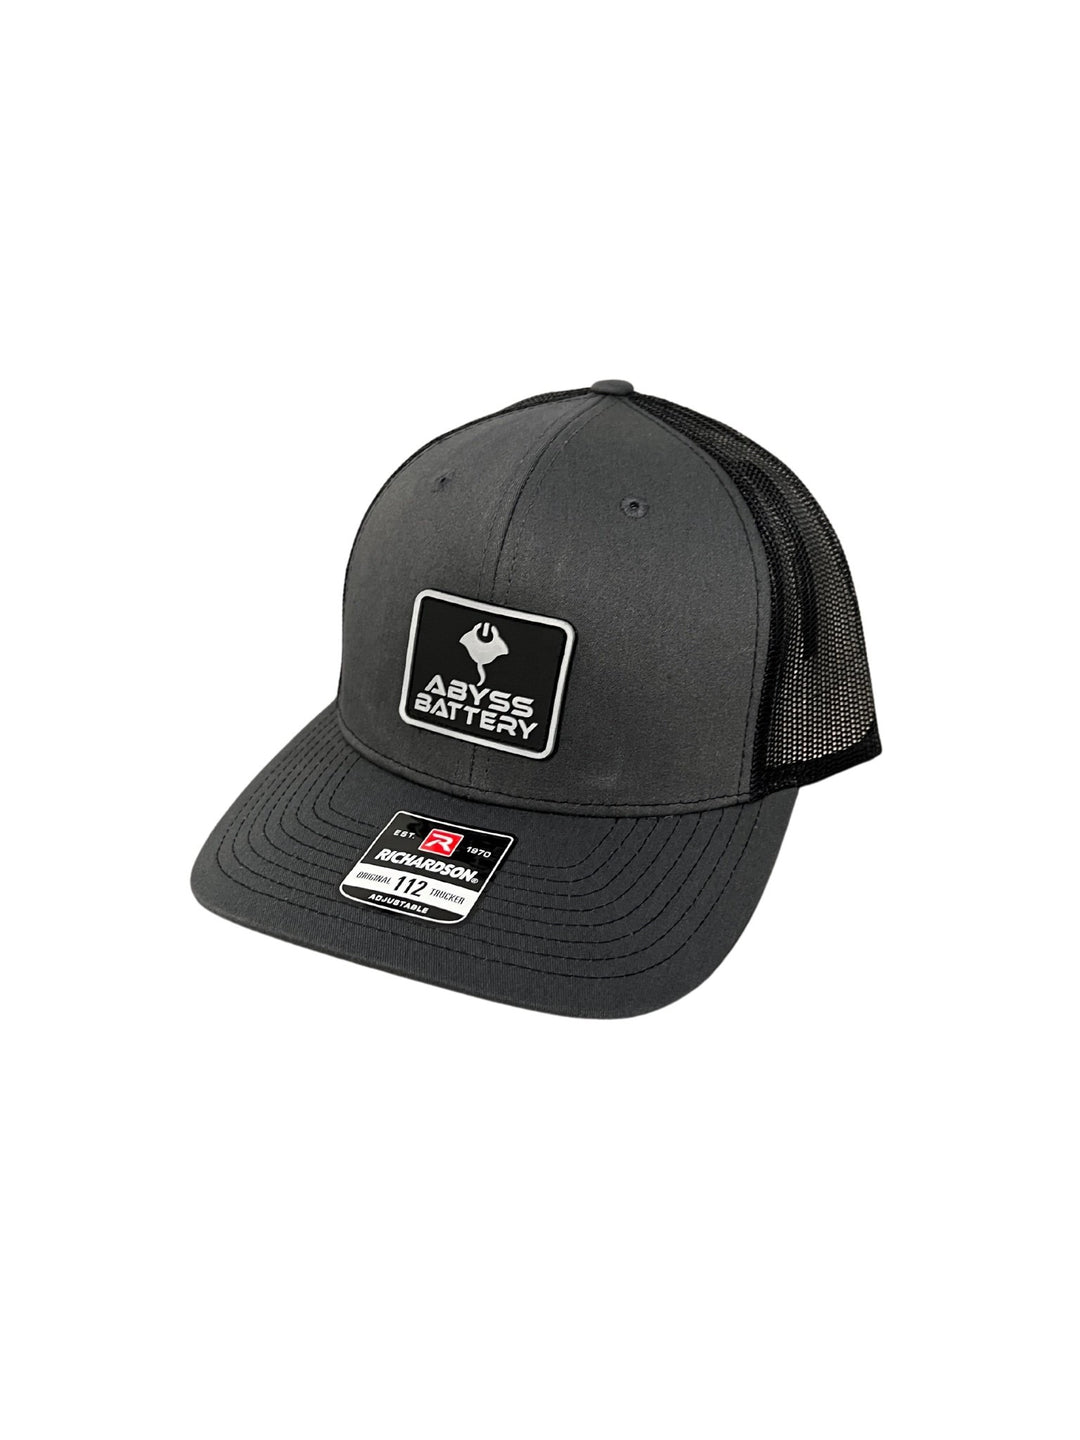 ABYSS® - Black on Black Richardson Trucker Hat